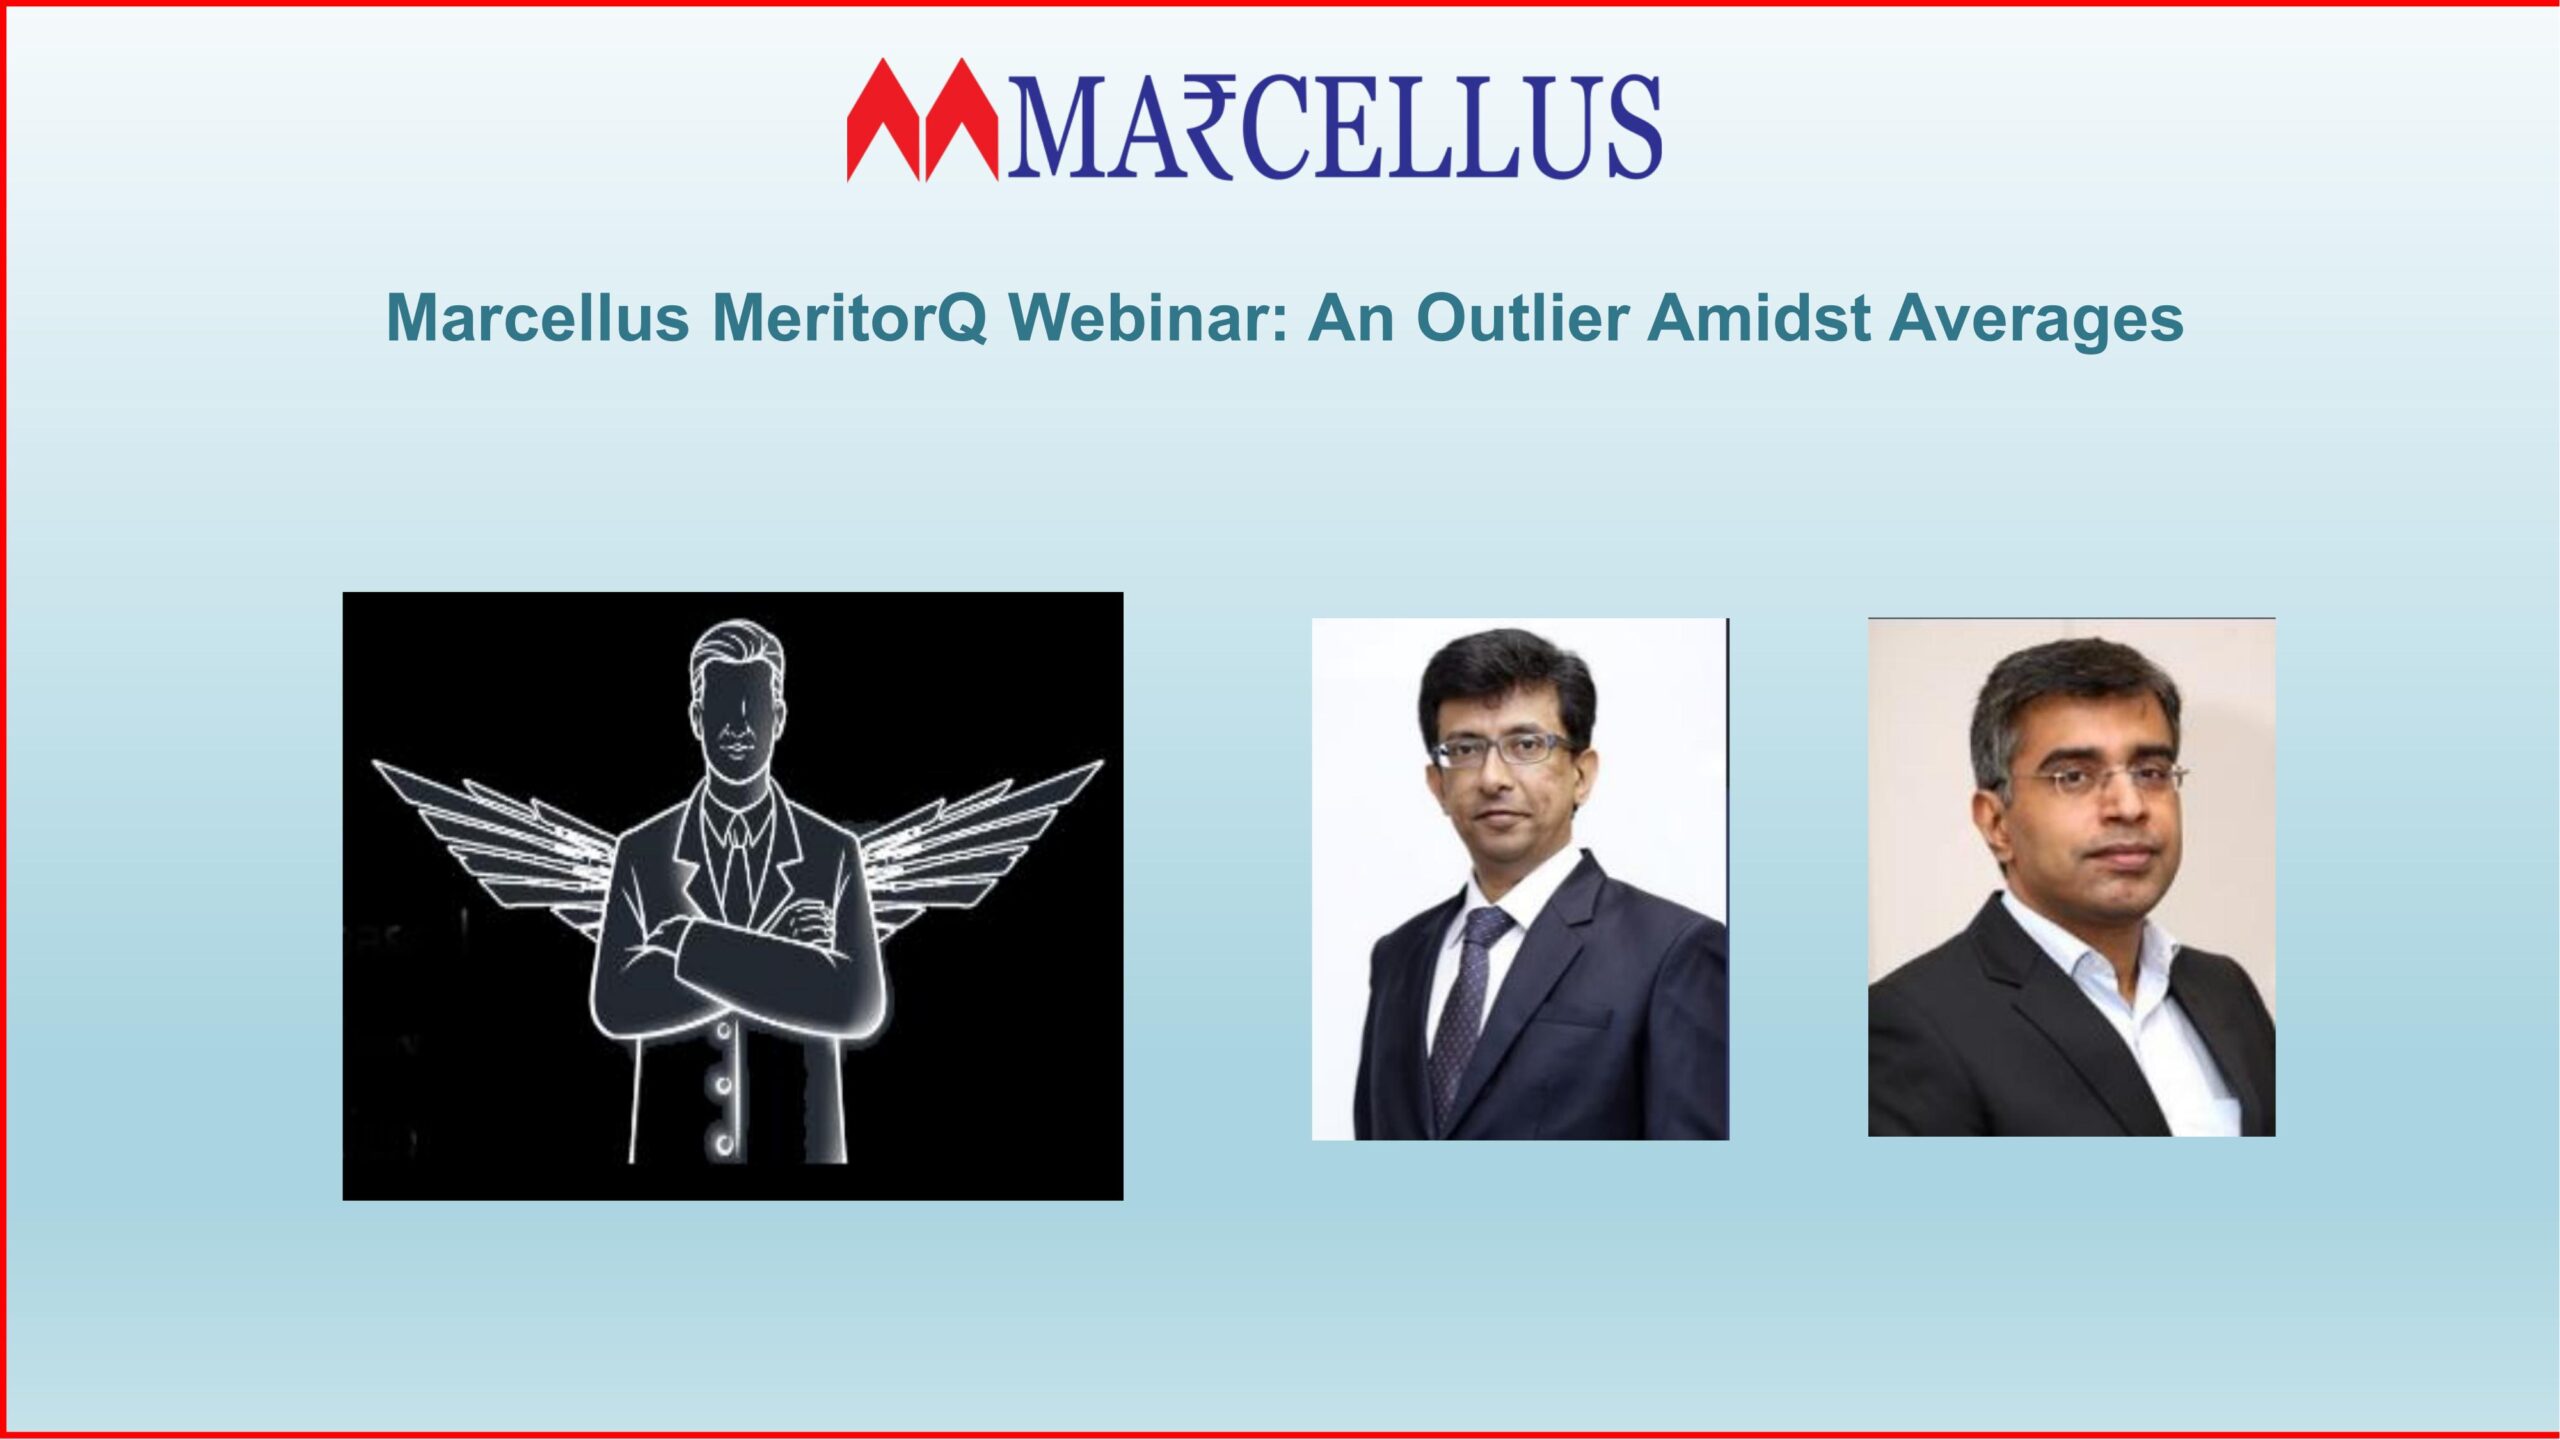 Marcellus MeritorQ Portfolio Webinar on Outlier Amidst Averages